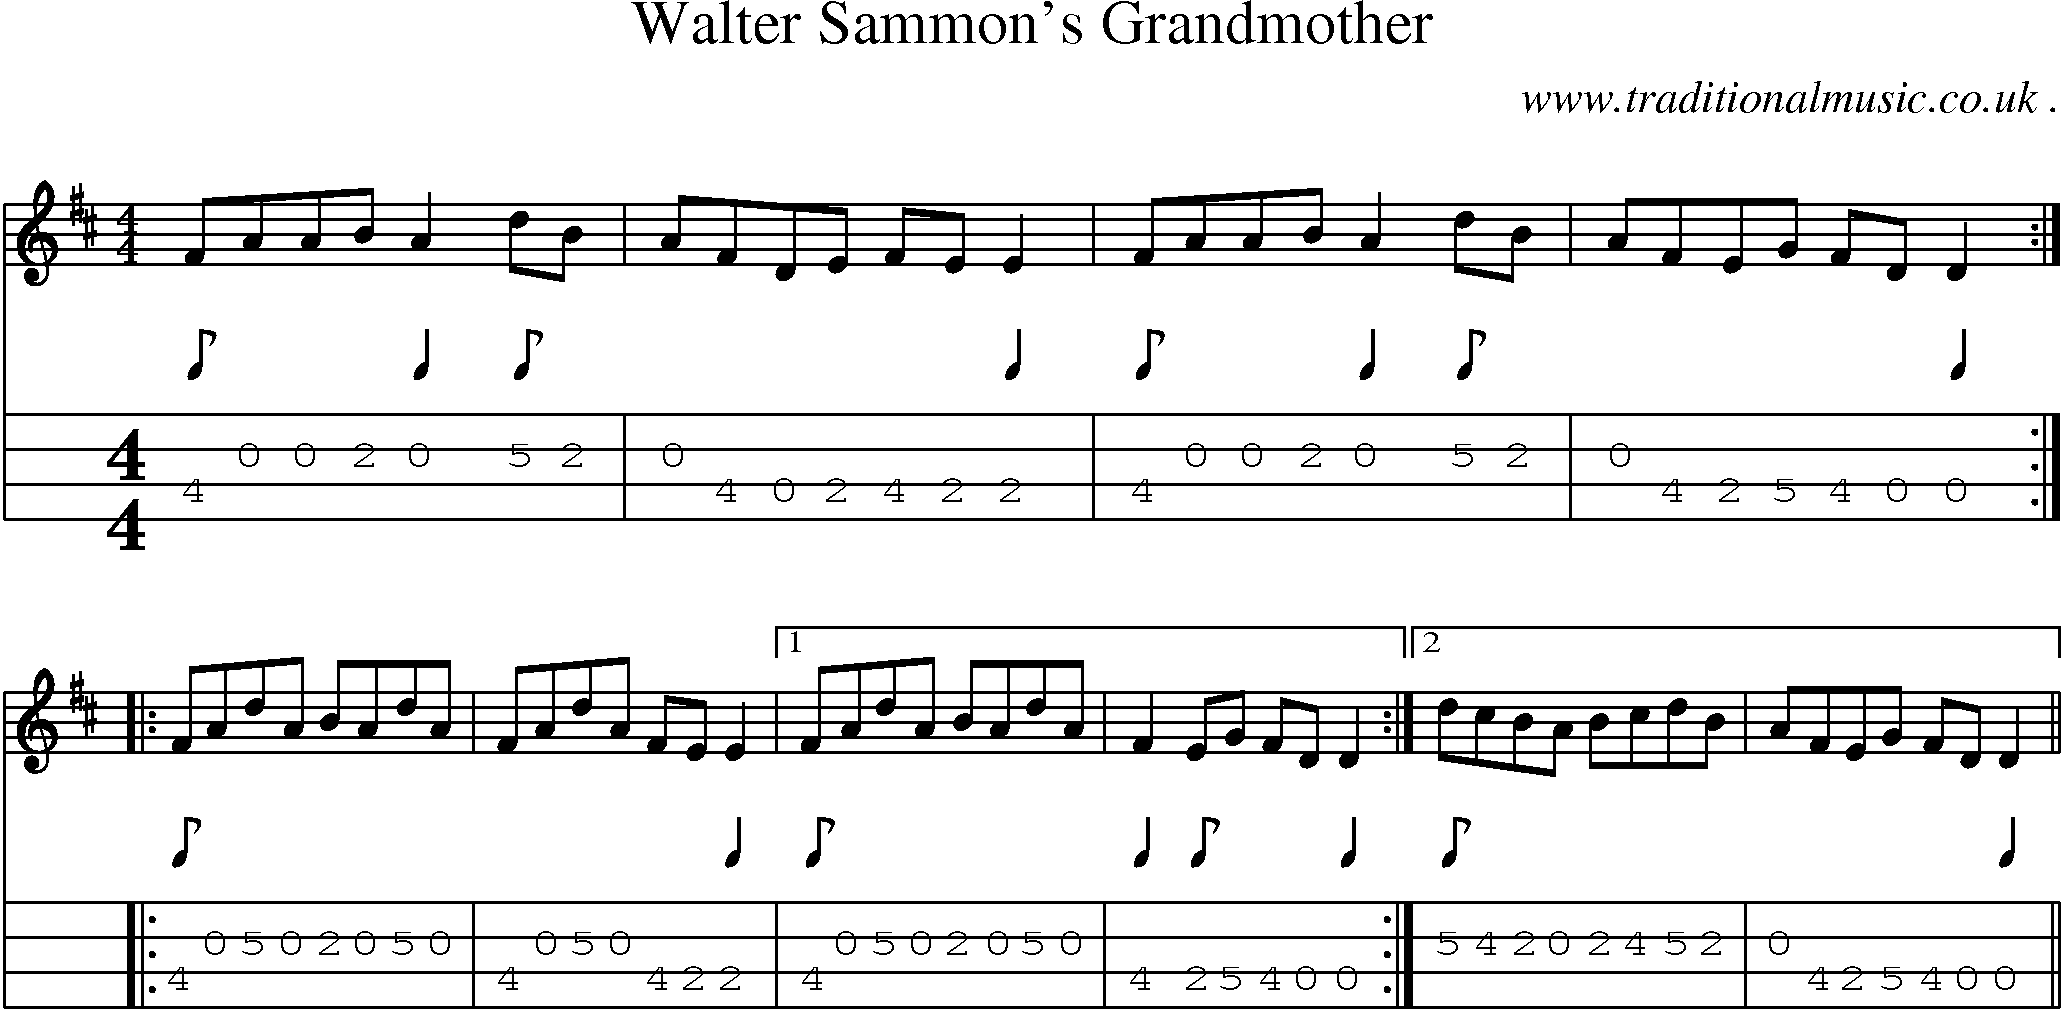 Sheet-Music and Mandolin Tabs for Walter Sammons Grandmother